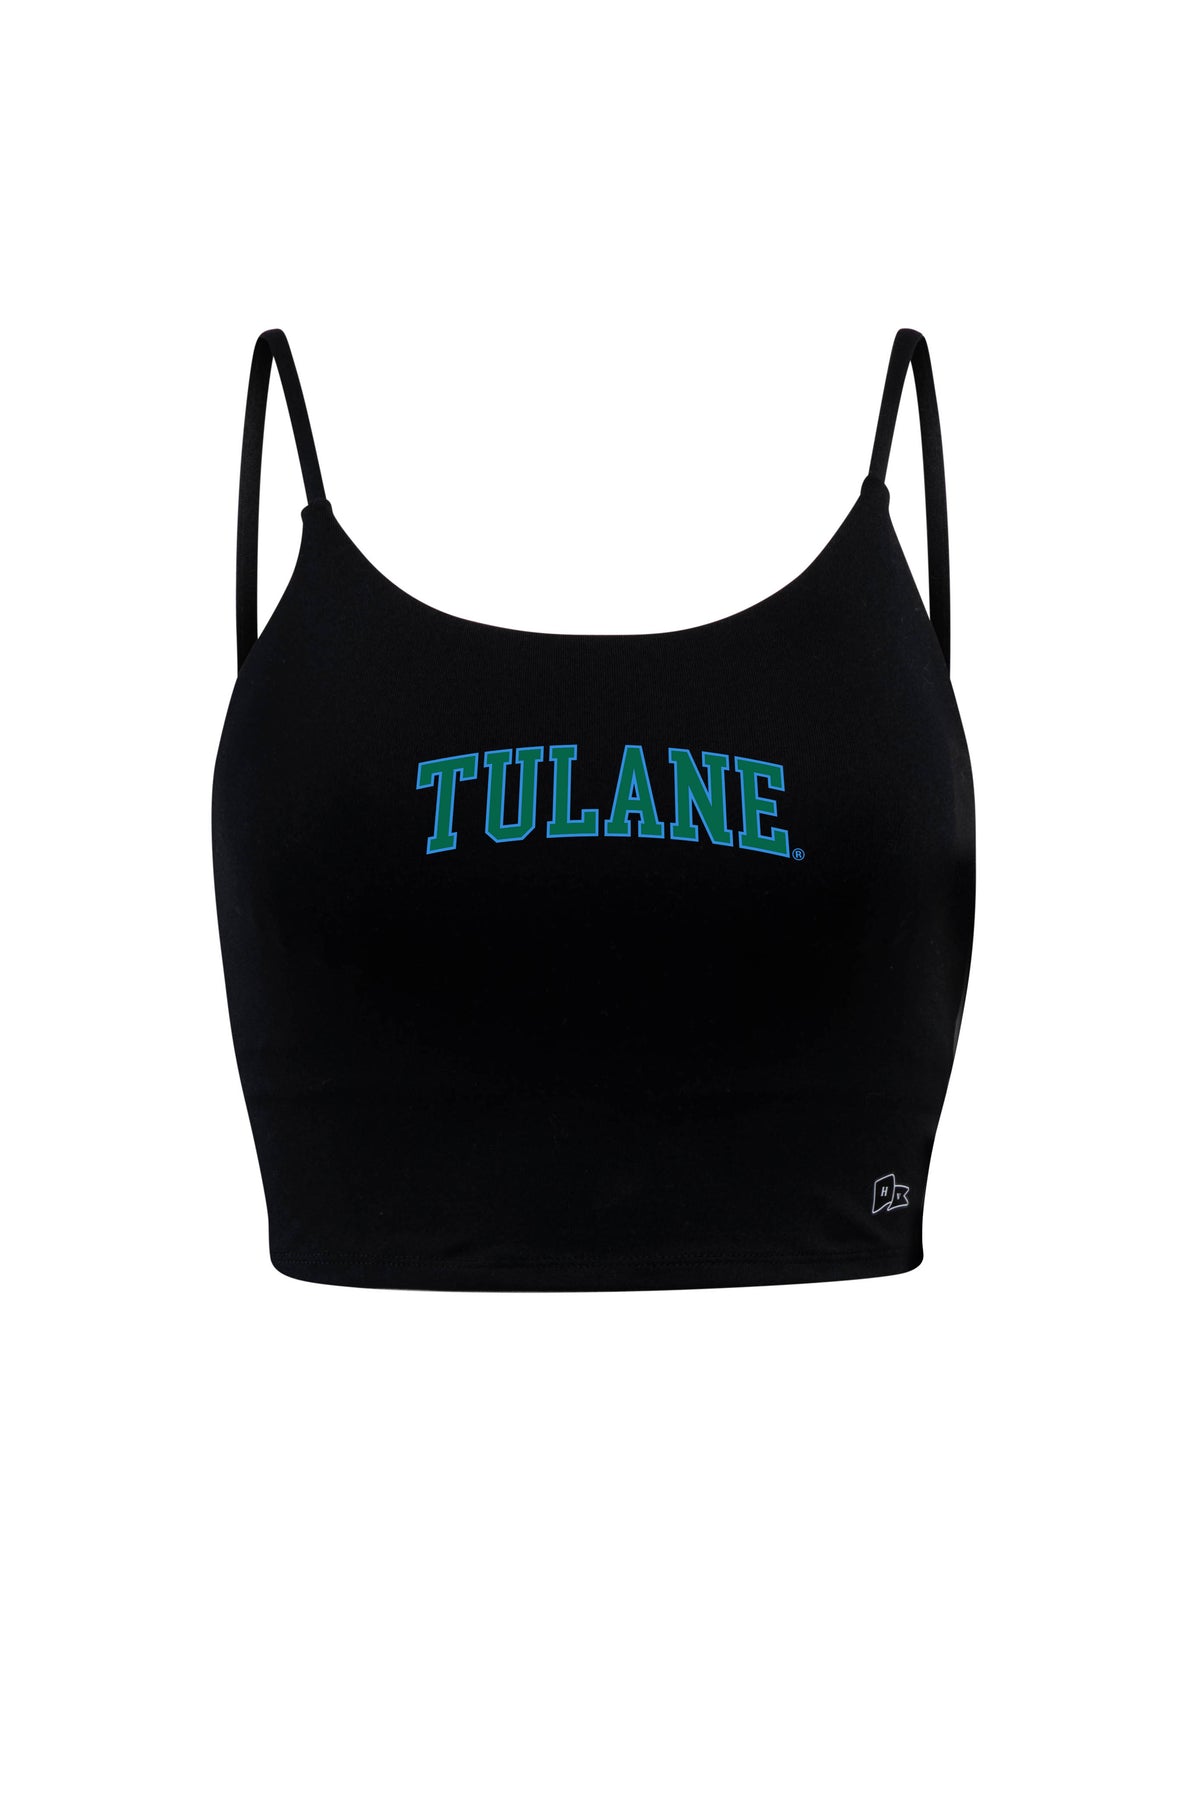 Tulane University Bra Tank Top